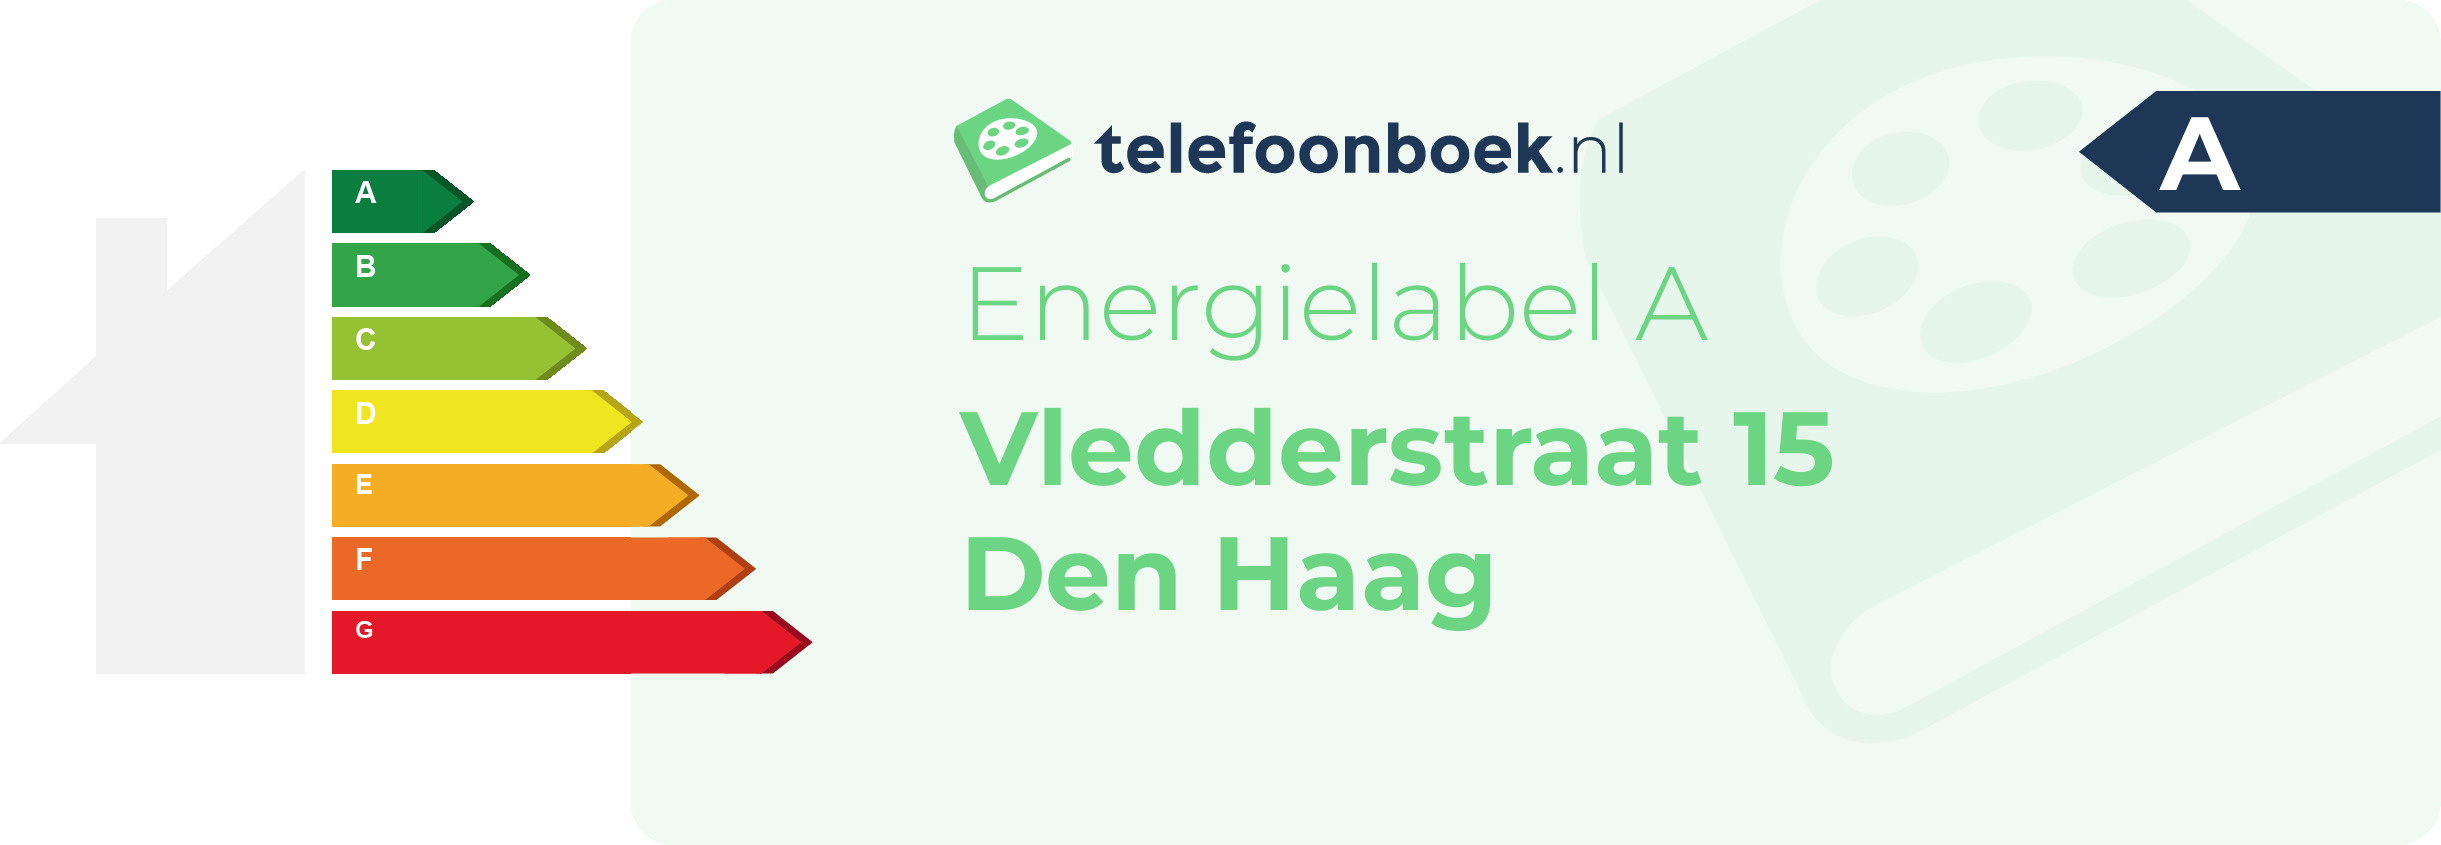 Energielabel Vledderstraat 15 Den Haag